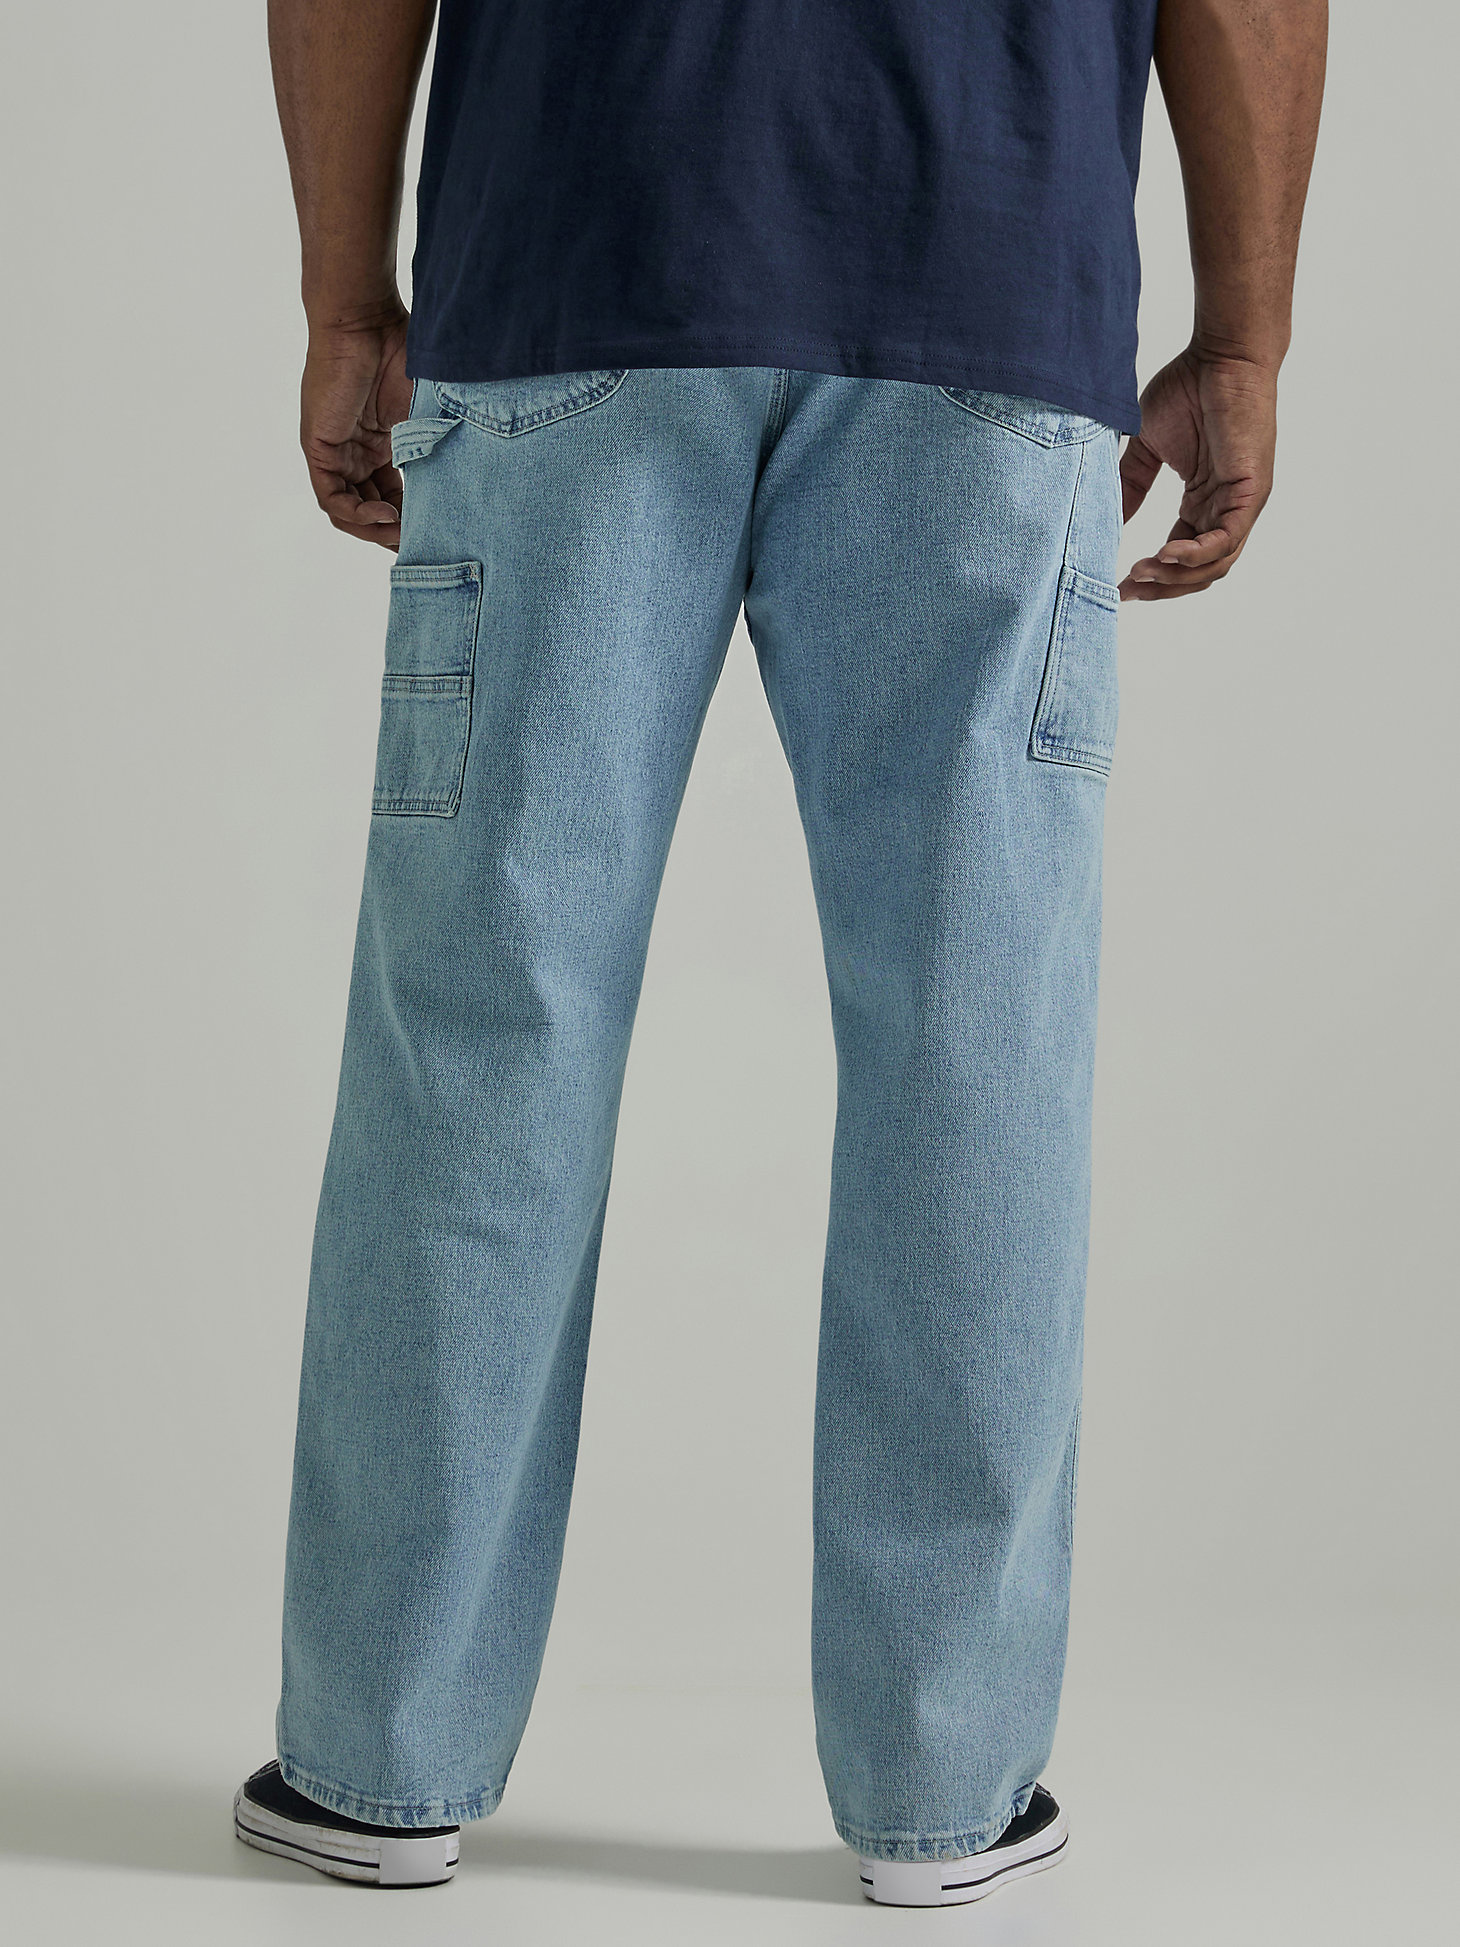 Men's Workwear Loose Fit Carpenter Jean (Big & Tall) in Union Fade Blue alternative view 2